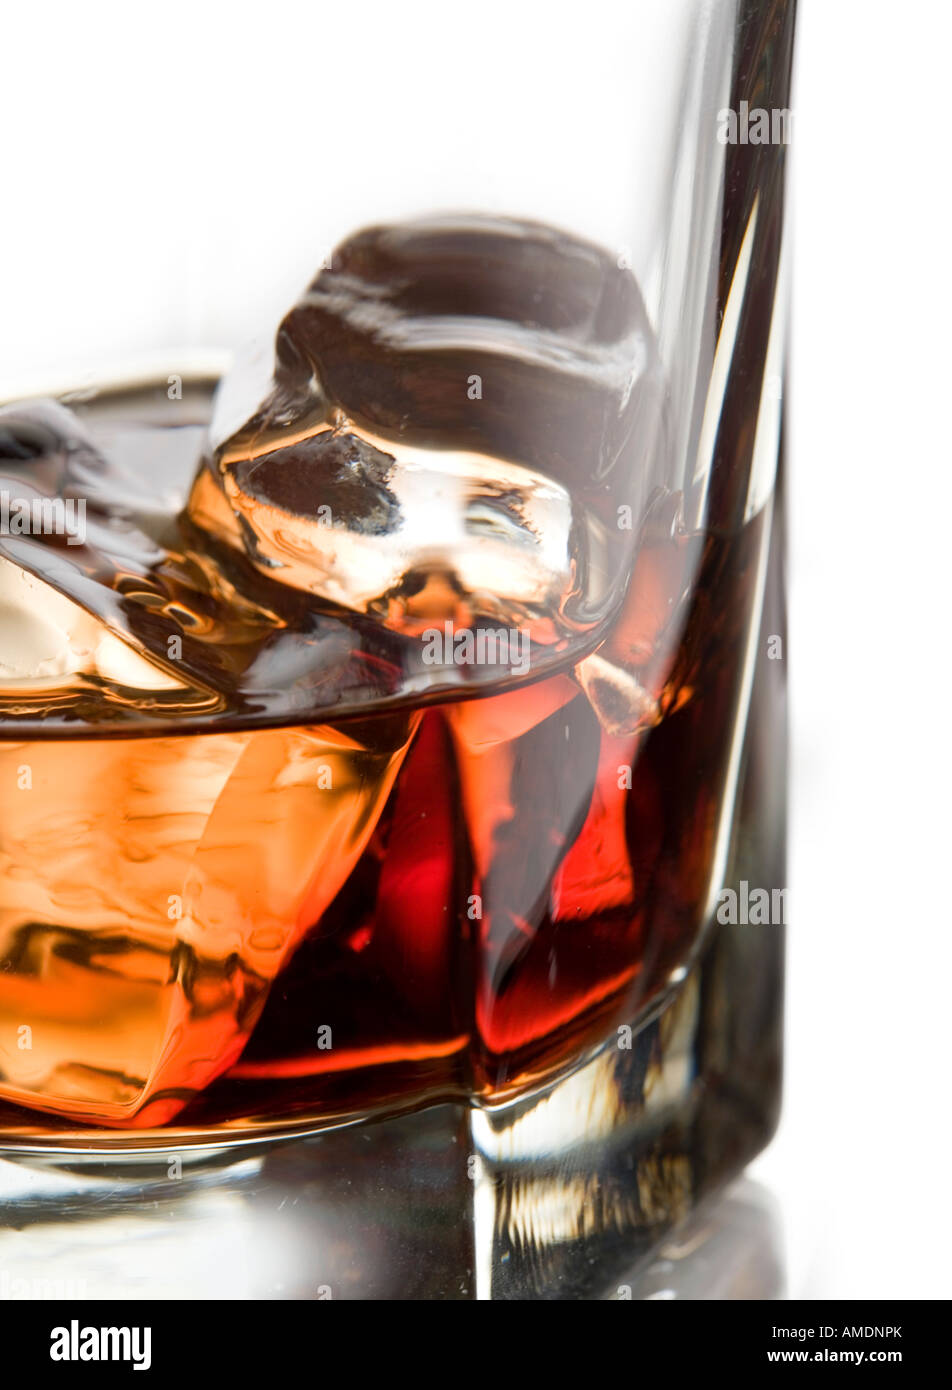 https://c8.alamy.com/comp/AMDNPK/close-up-of-a-glass-of-bourbon-whisky-on-the-rocks-AMDNPK.jpg